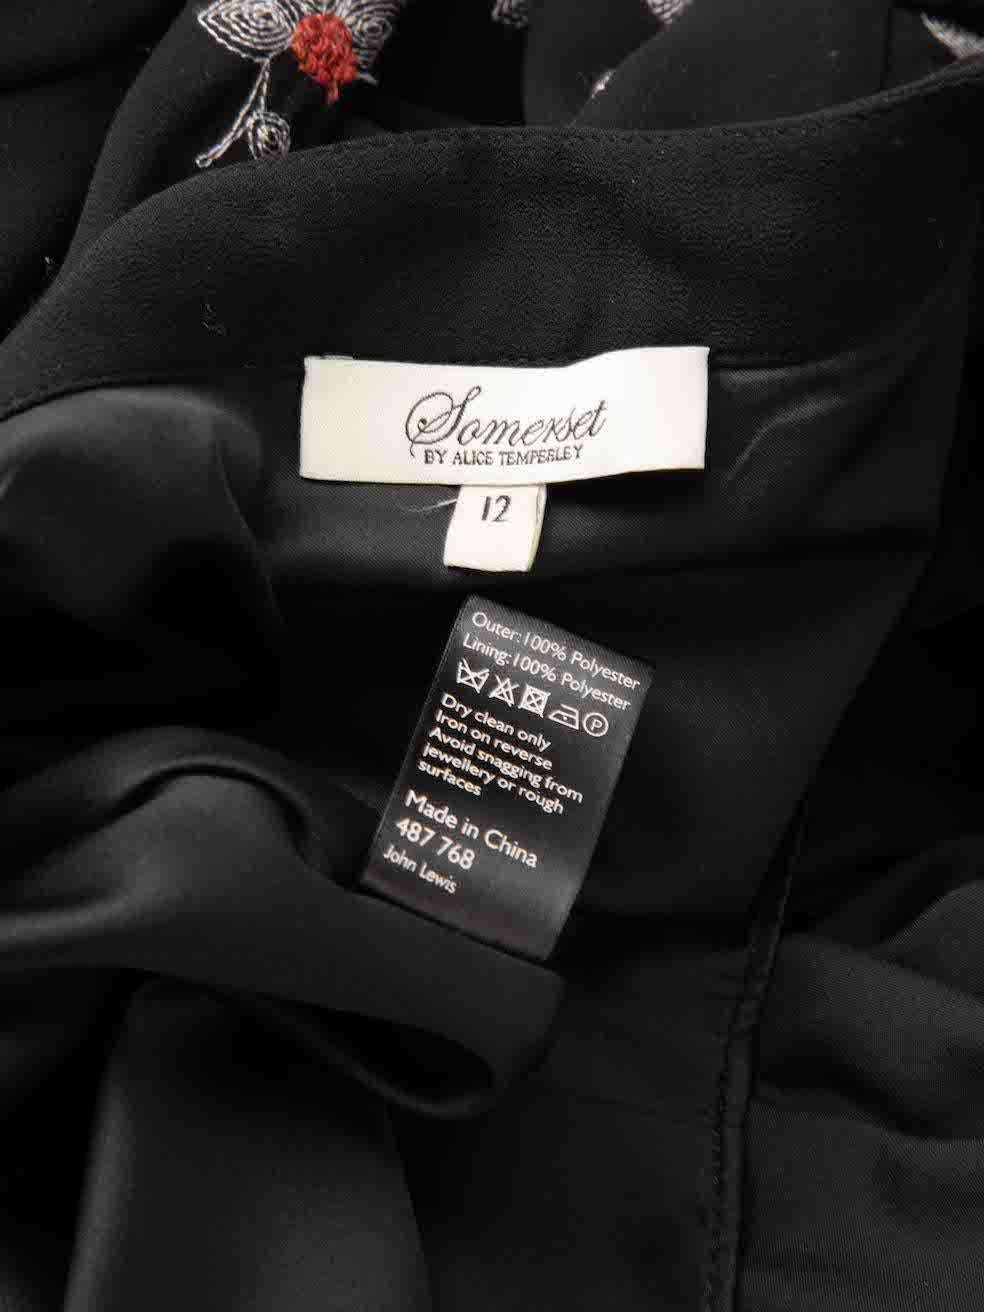 Temperley London Black Floral Embroidered Dress Size L For Sale 1